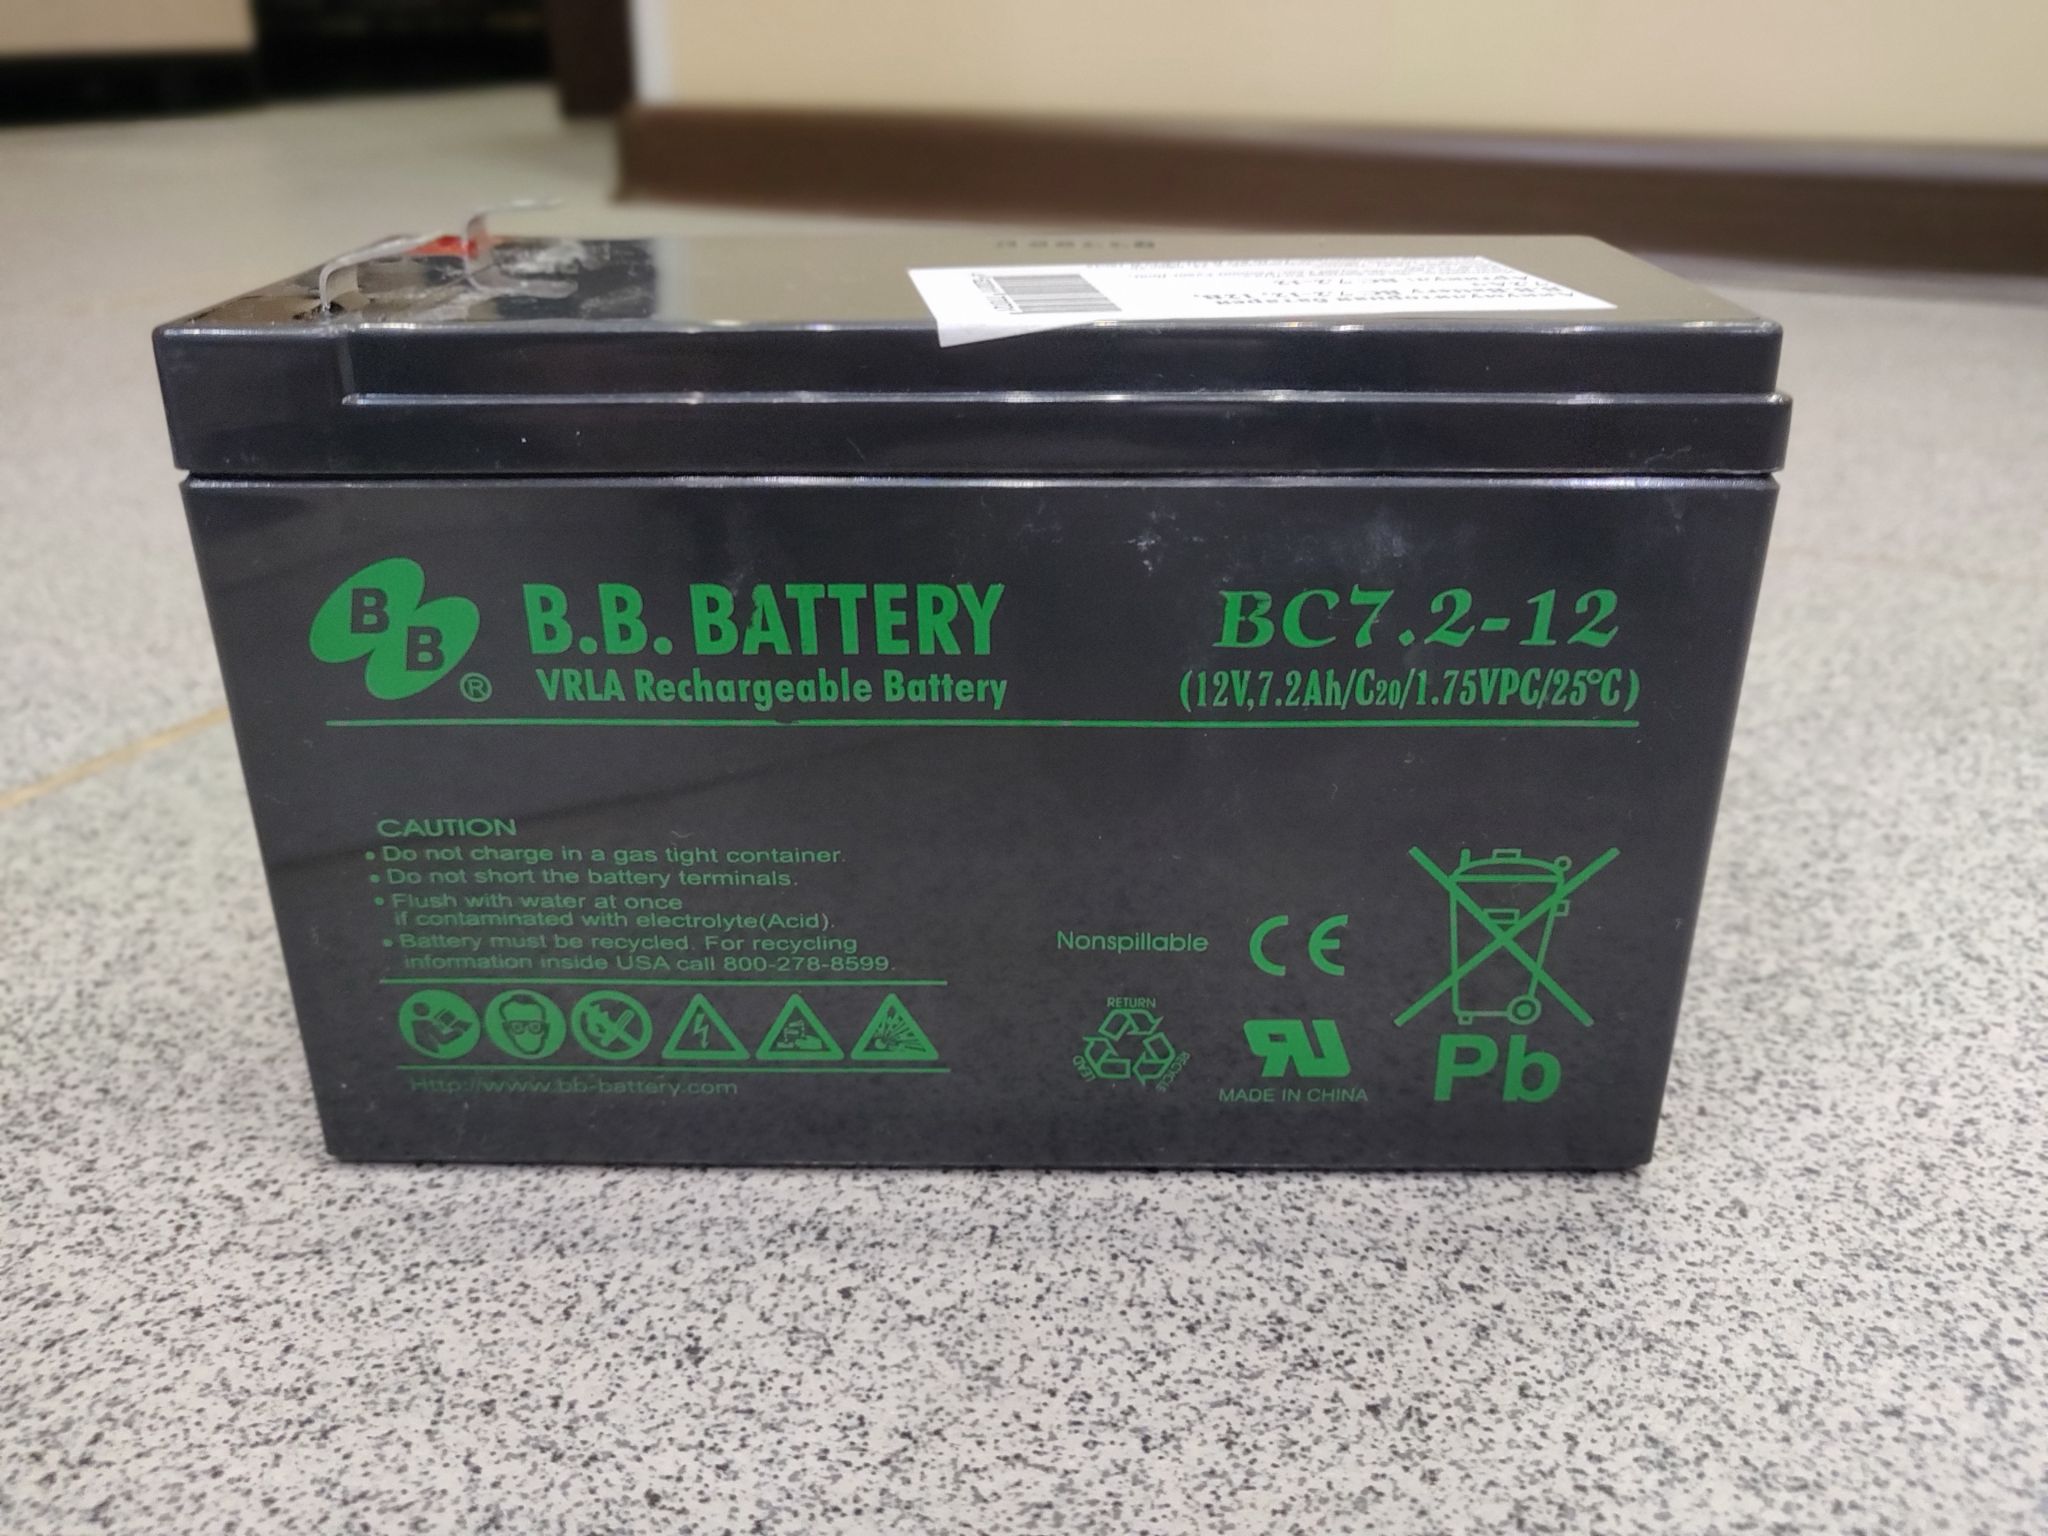 Bc battery. Аккумулятор для ИБП 12v 7ah b.b. Battery bc7-12. BB Battery hrl9-12 этикетка. Тип вывода b3 на АКБ B.B Battery. B.B.Battery CPS 7-12 аналоги.